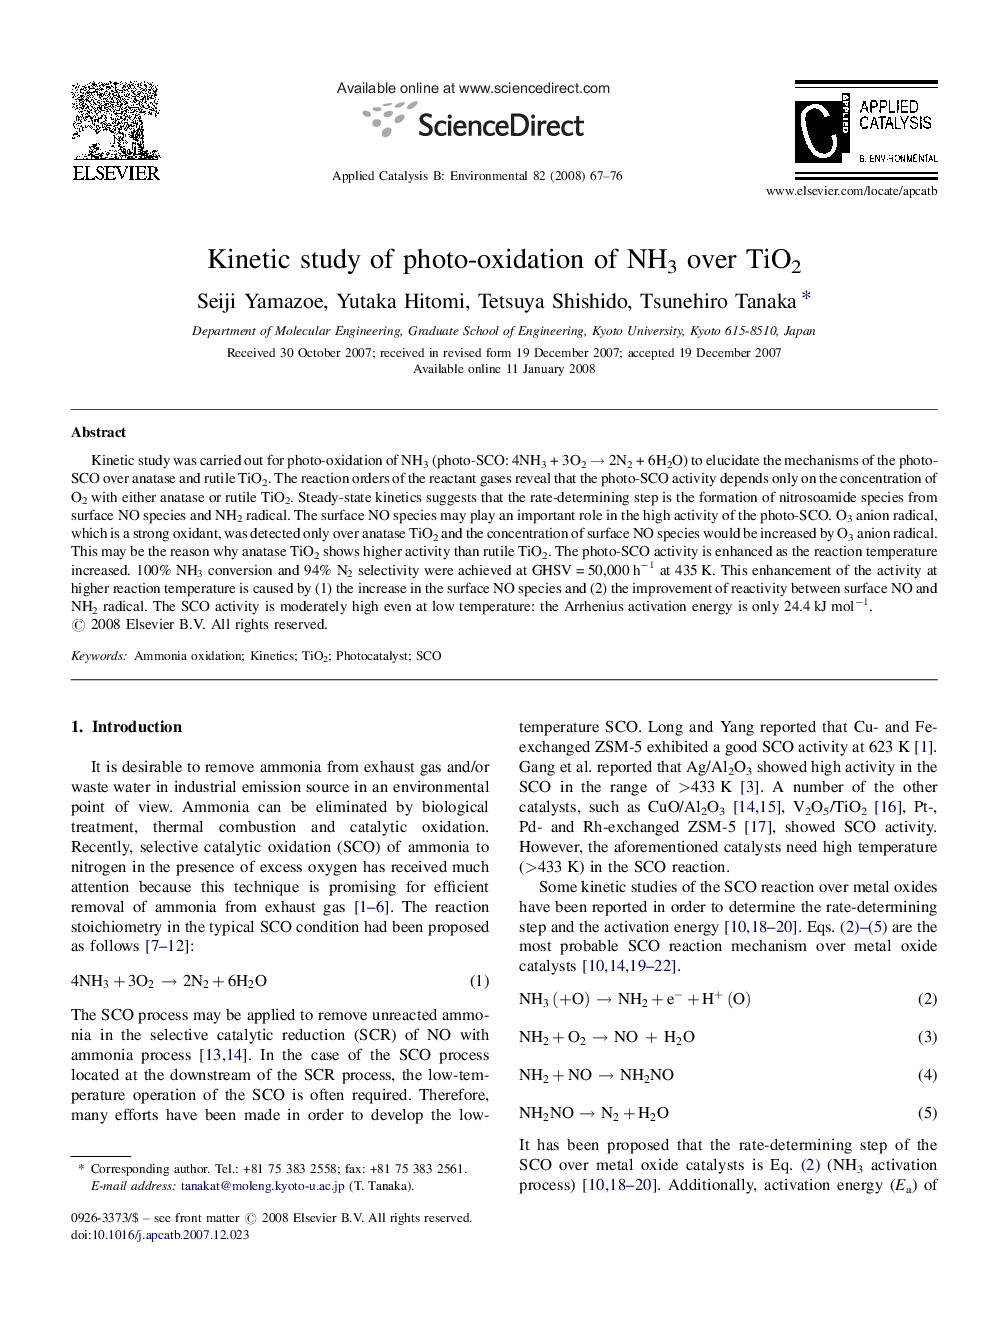 Kinetic study of photo-oxidation of NH3 over TiO2